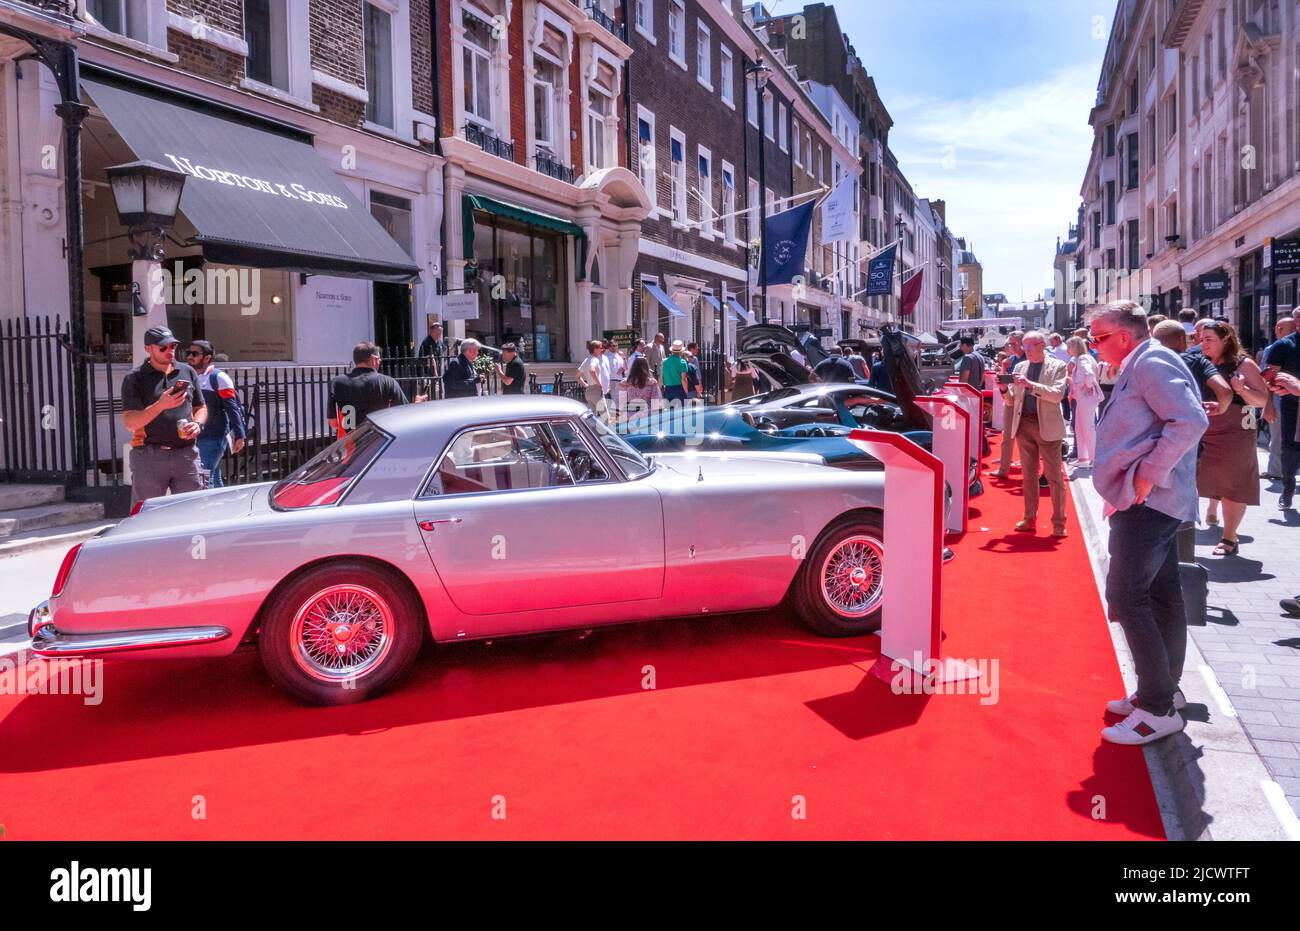 Concours on Savile Row classic automobile show London UK Stock Photo